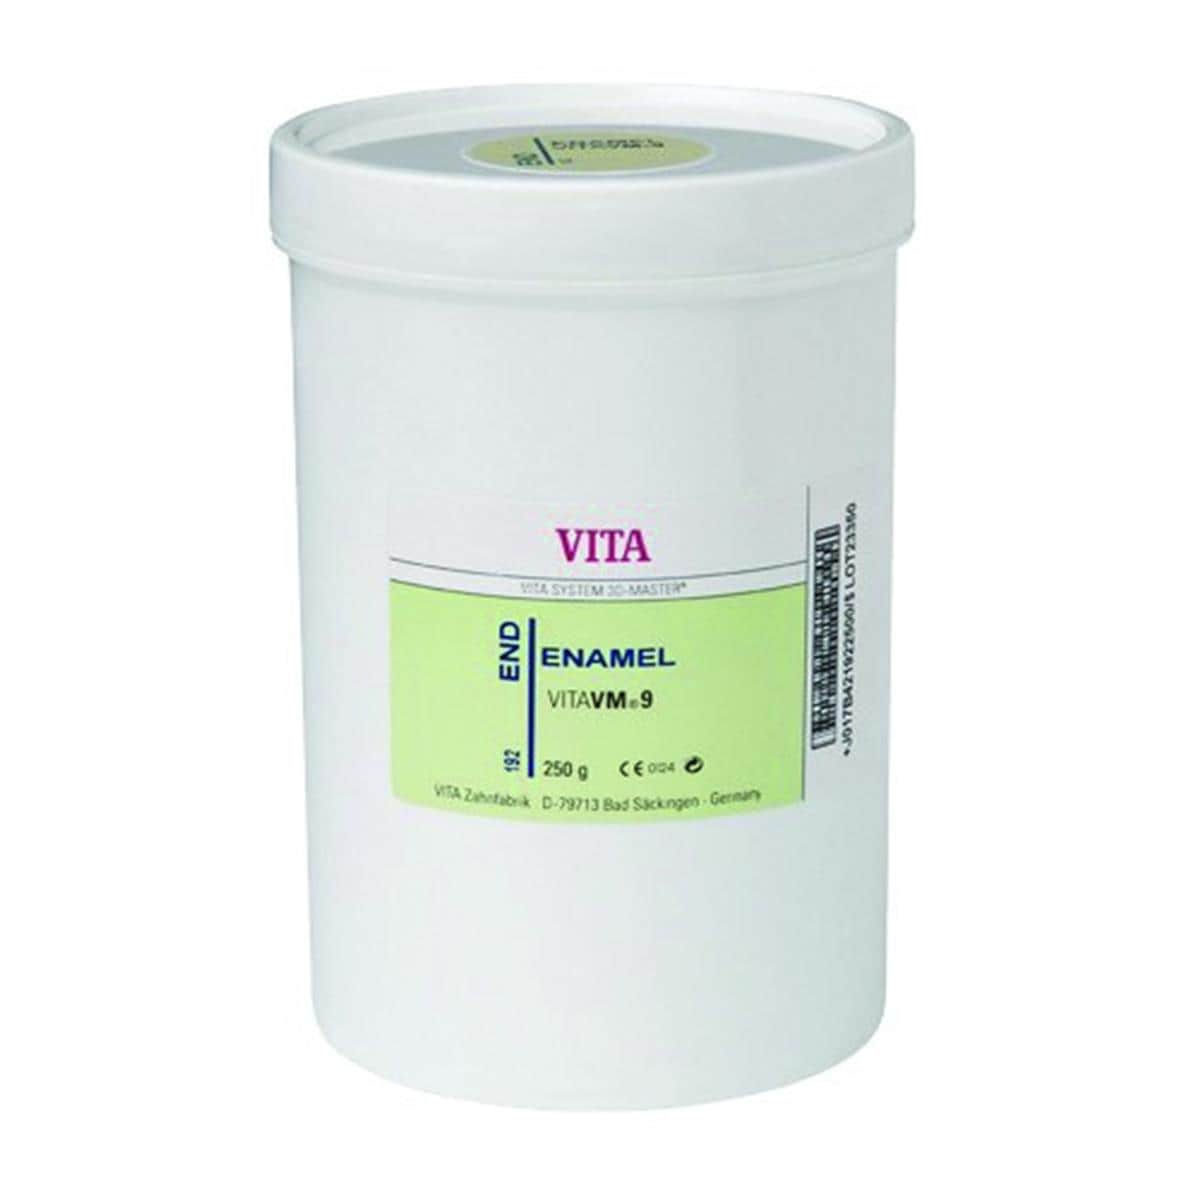 VM9 VITA - Enamel - END - Le pot de 250 g